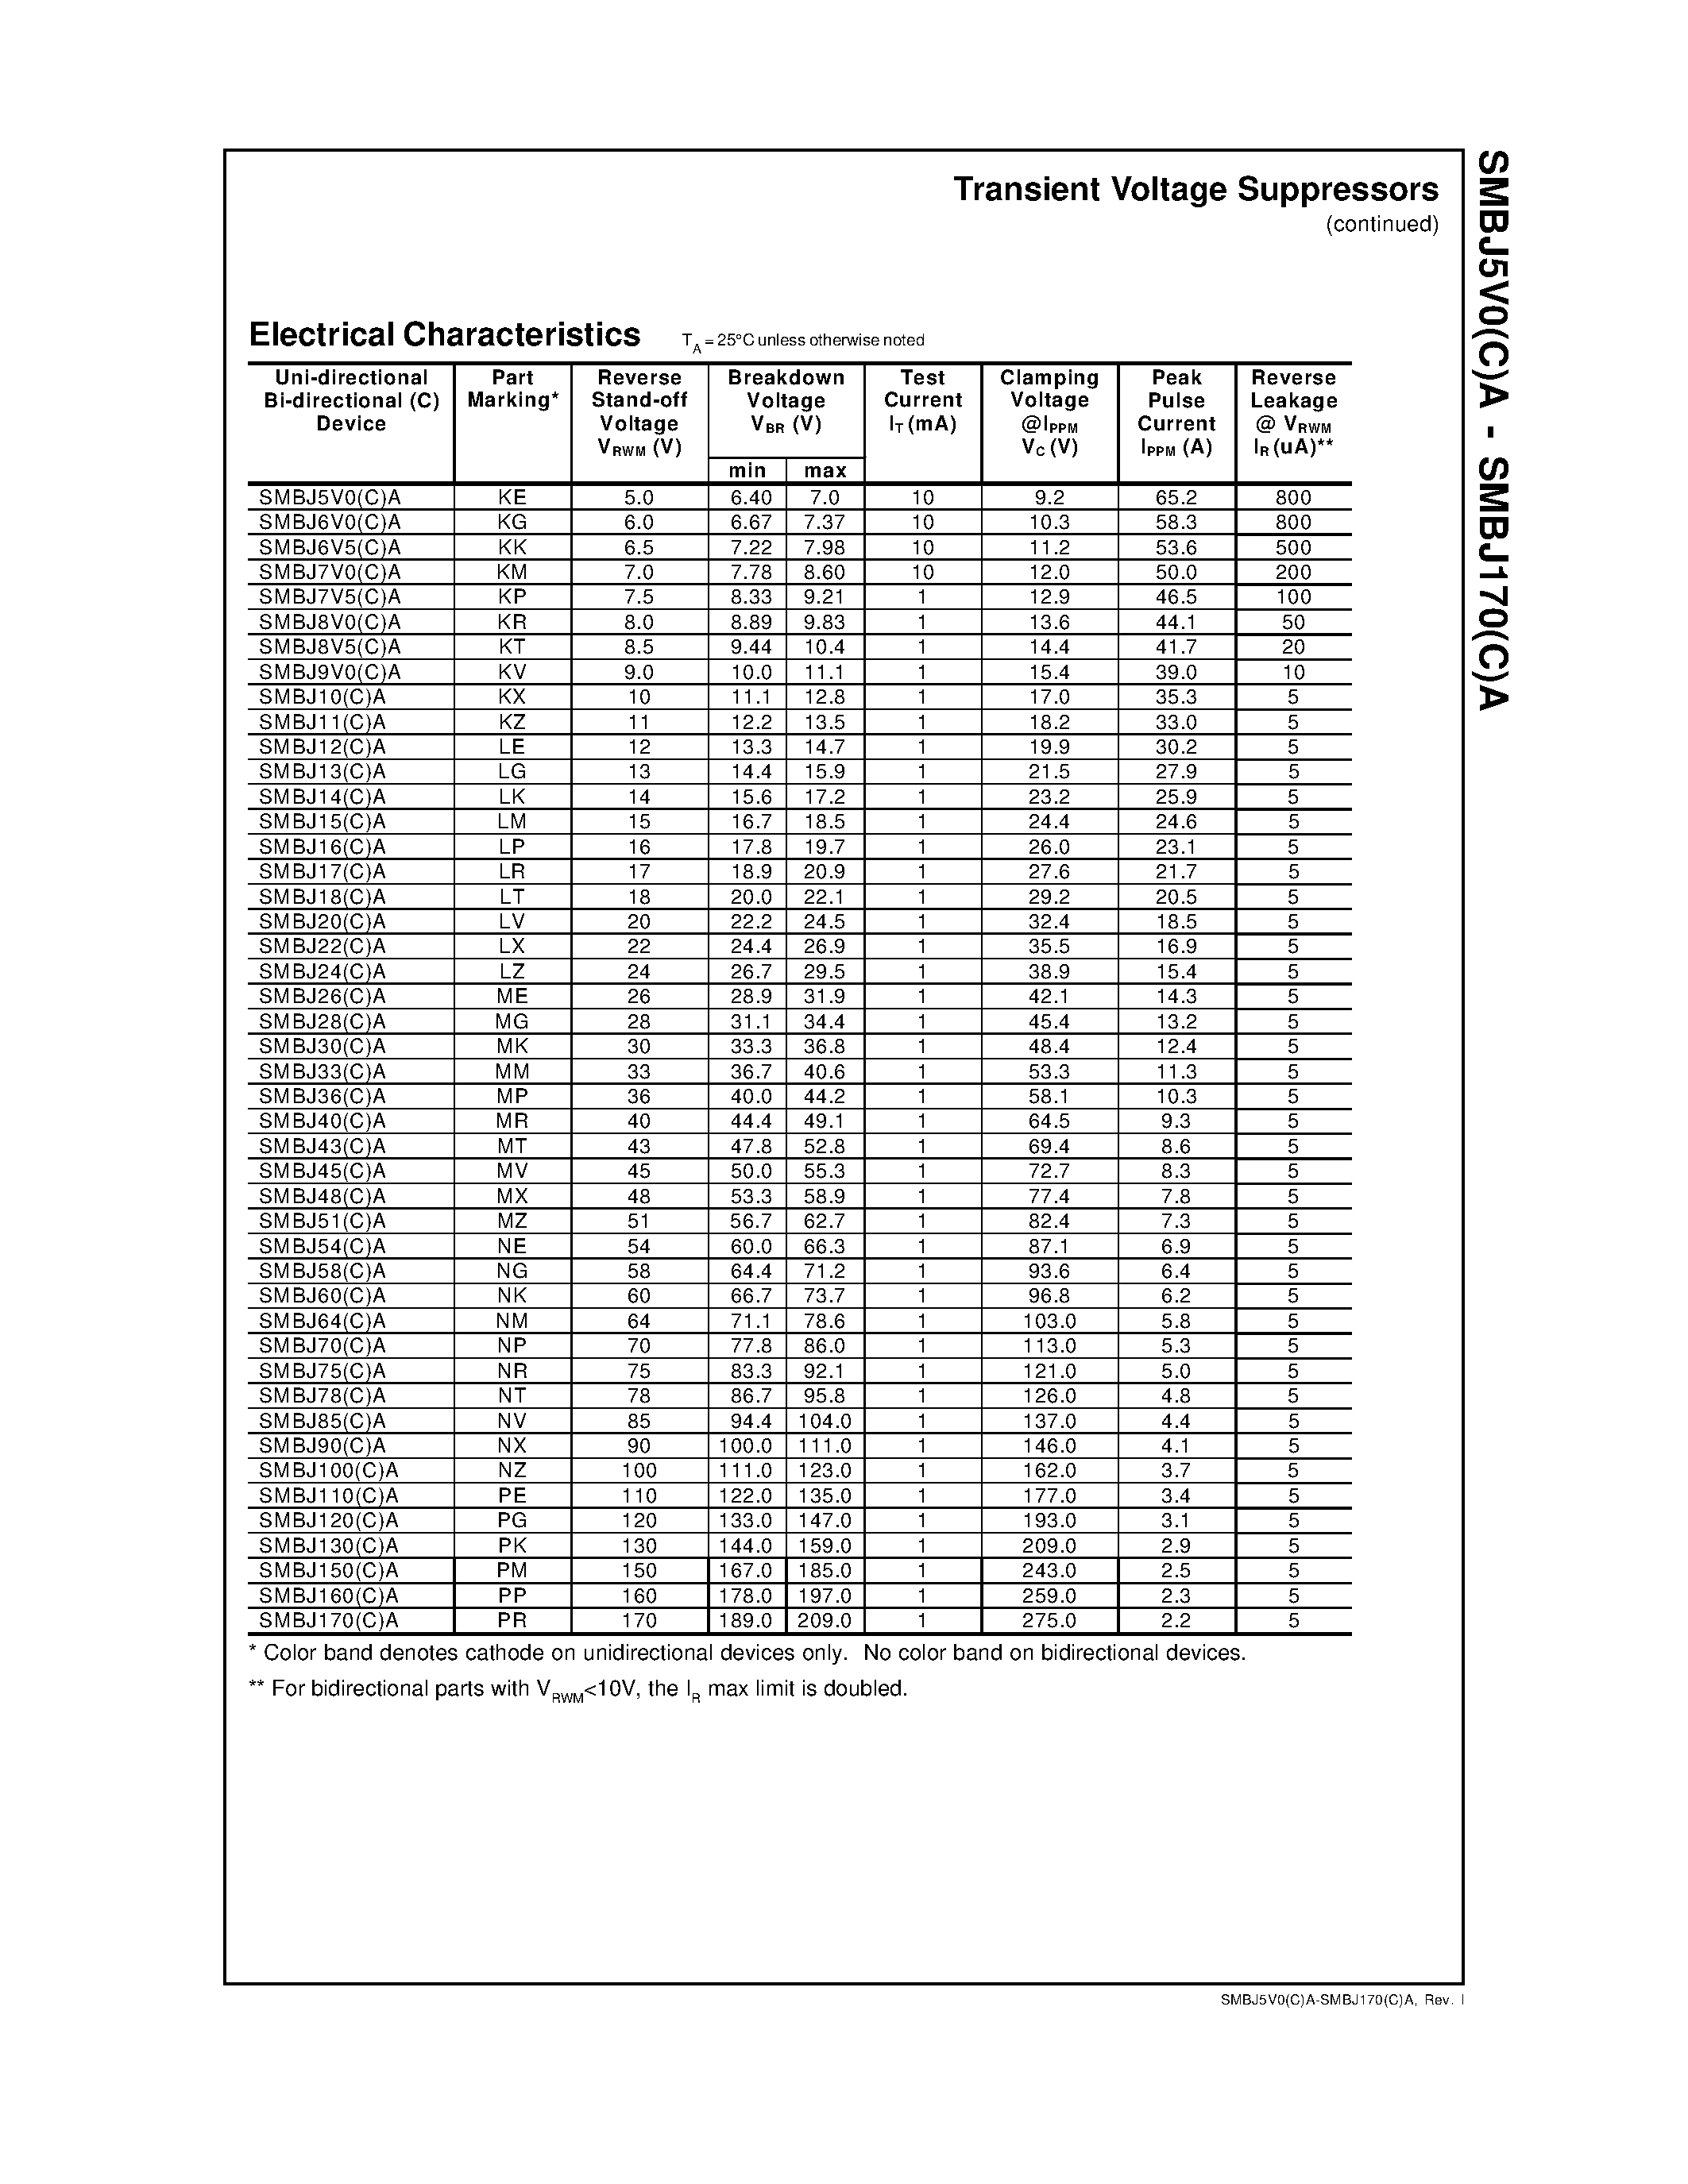 Datasheet SMBJ120A - Transient Voltage Suppressors SMBJ5V0(C)A - SMBJ170(C)A page 2